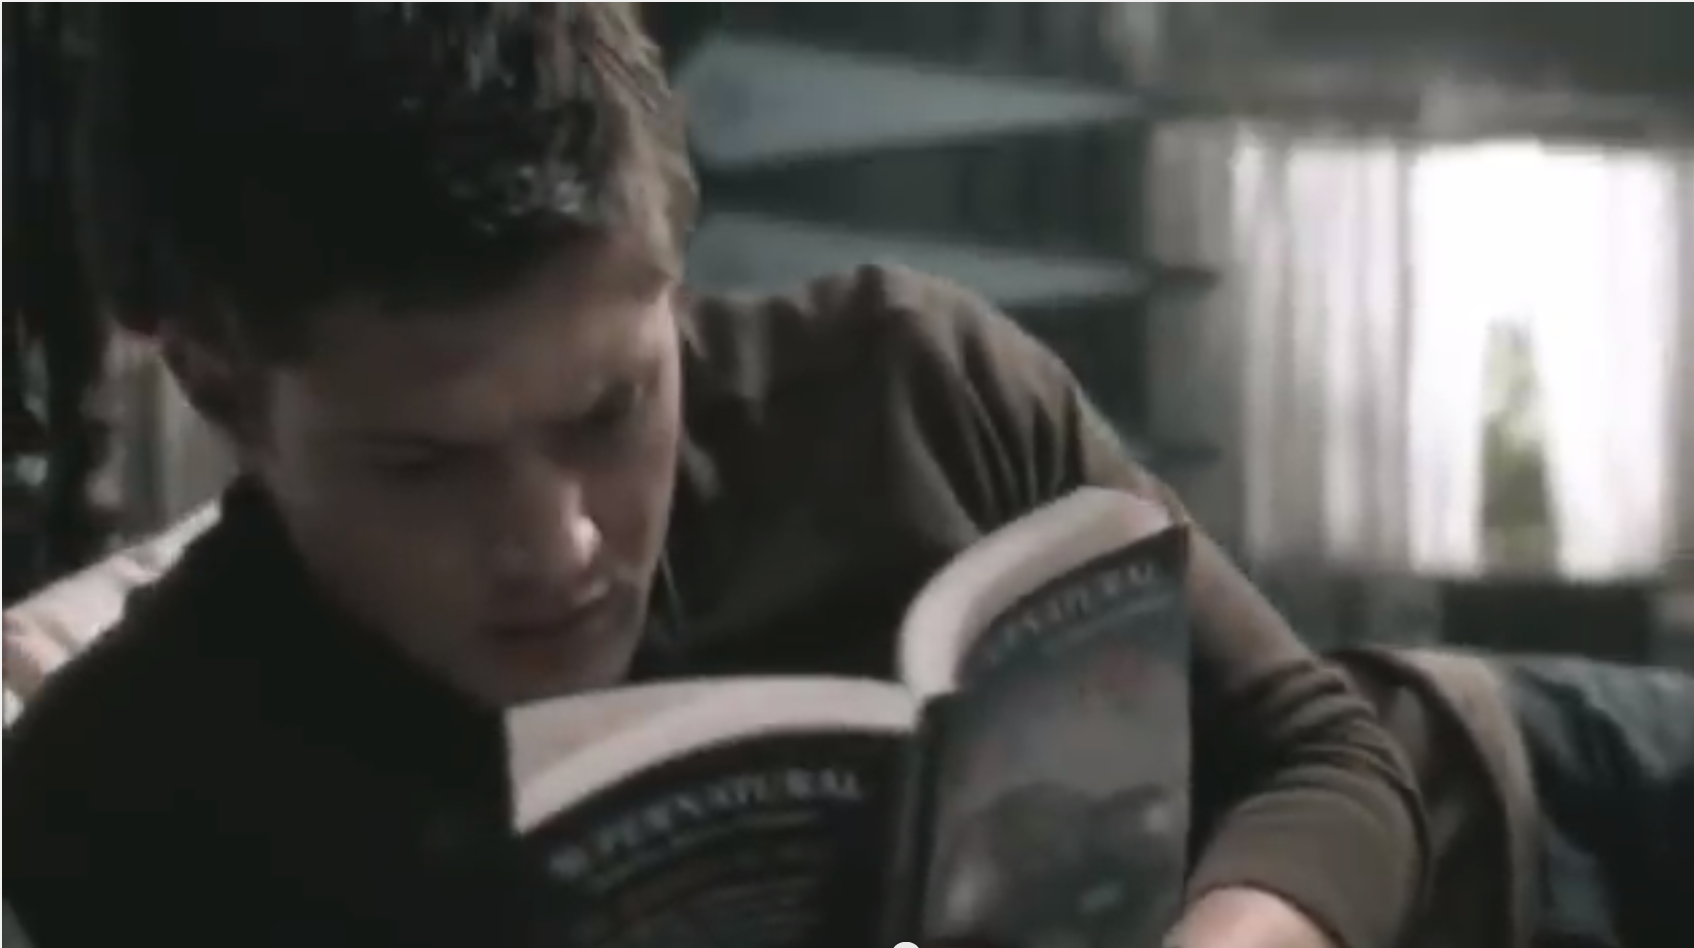 Dean reads Supernatural books by Chuck